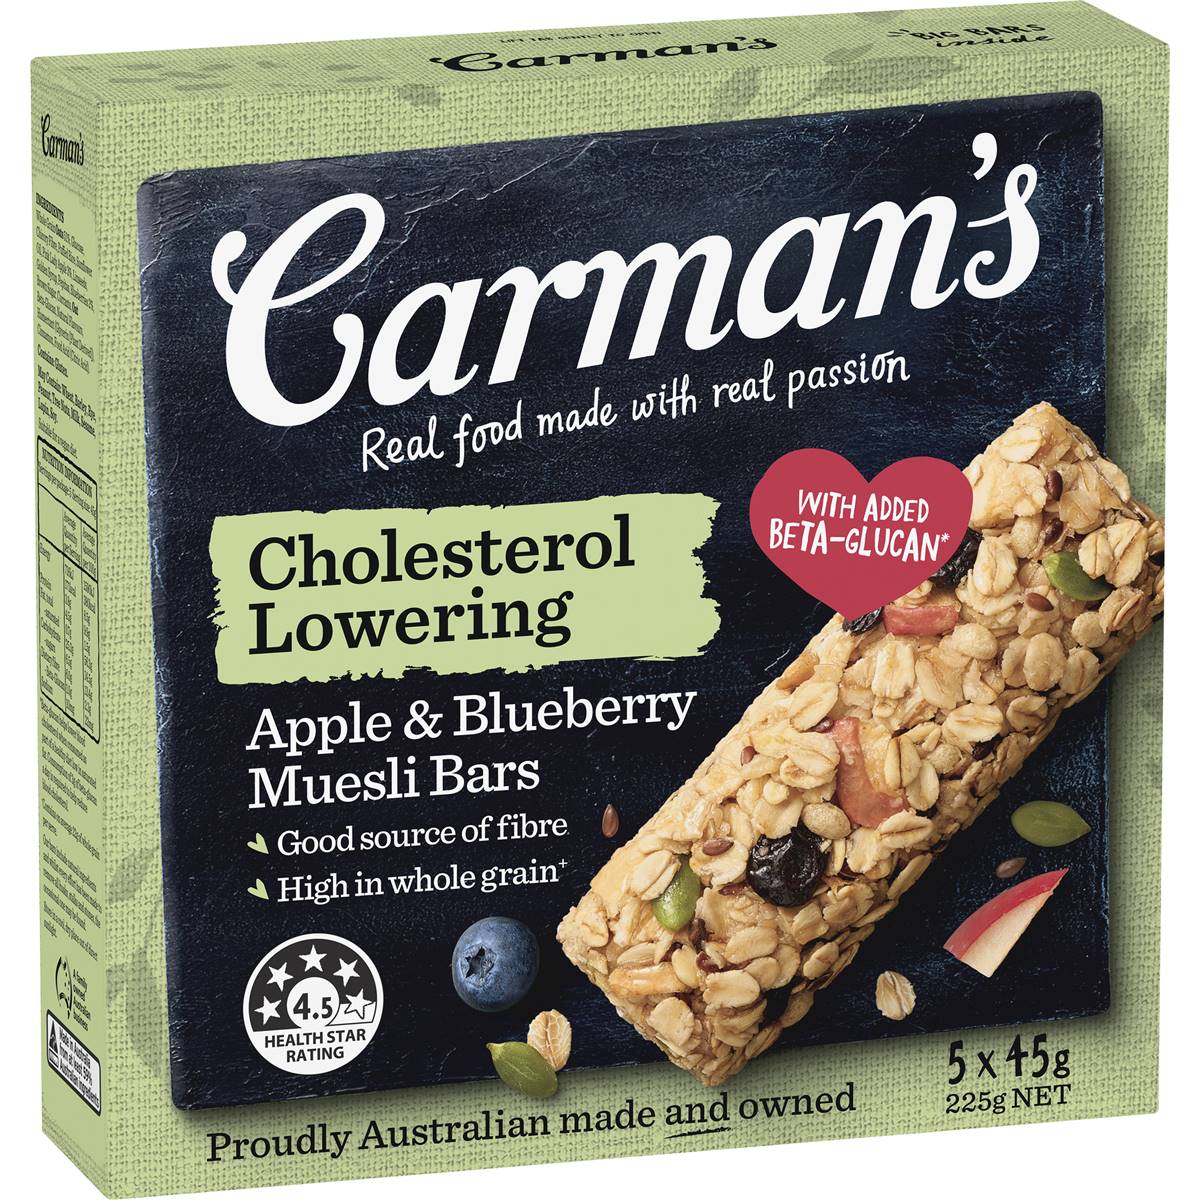 Calories in Carman's Cholesterol Lowering Apple & Blueberry Muesli Bars